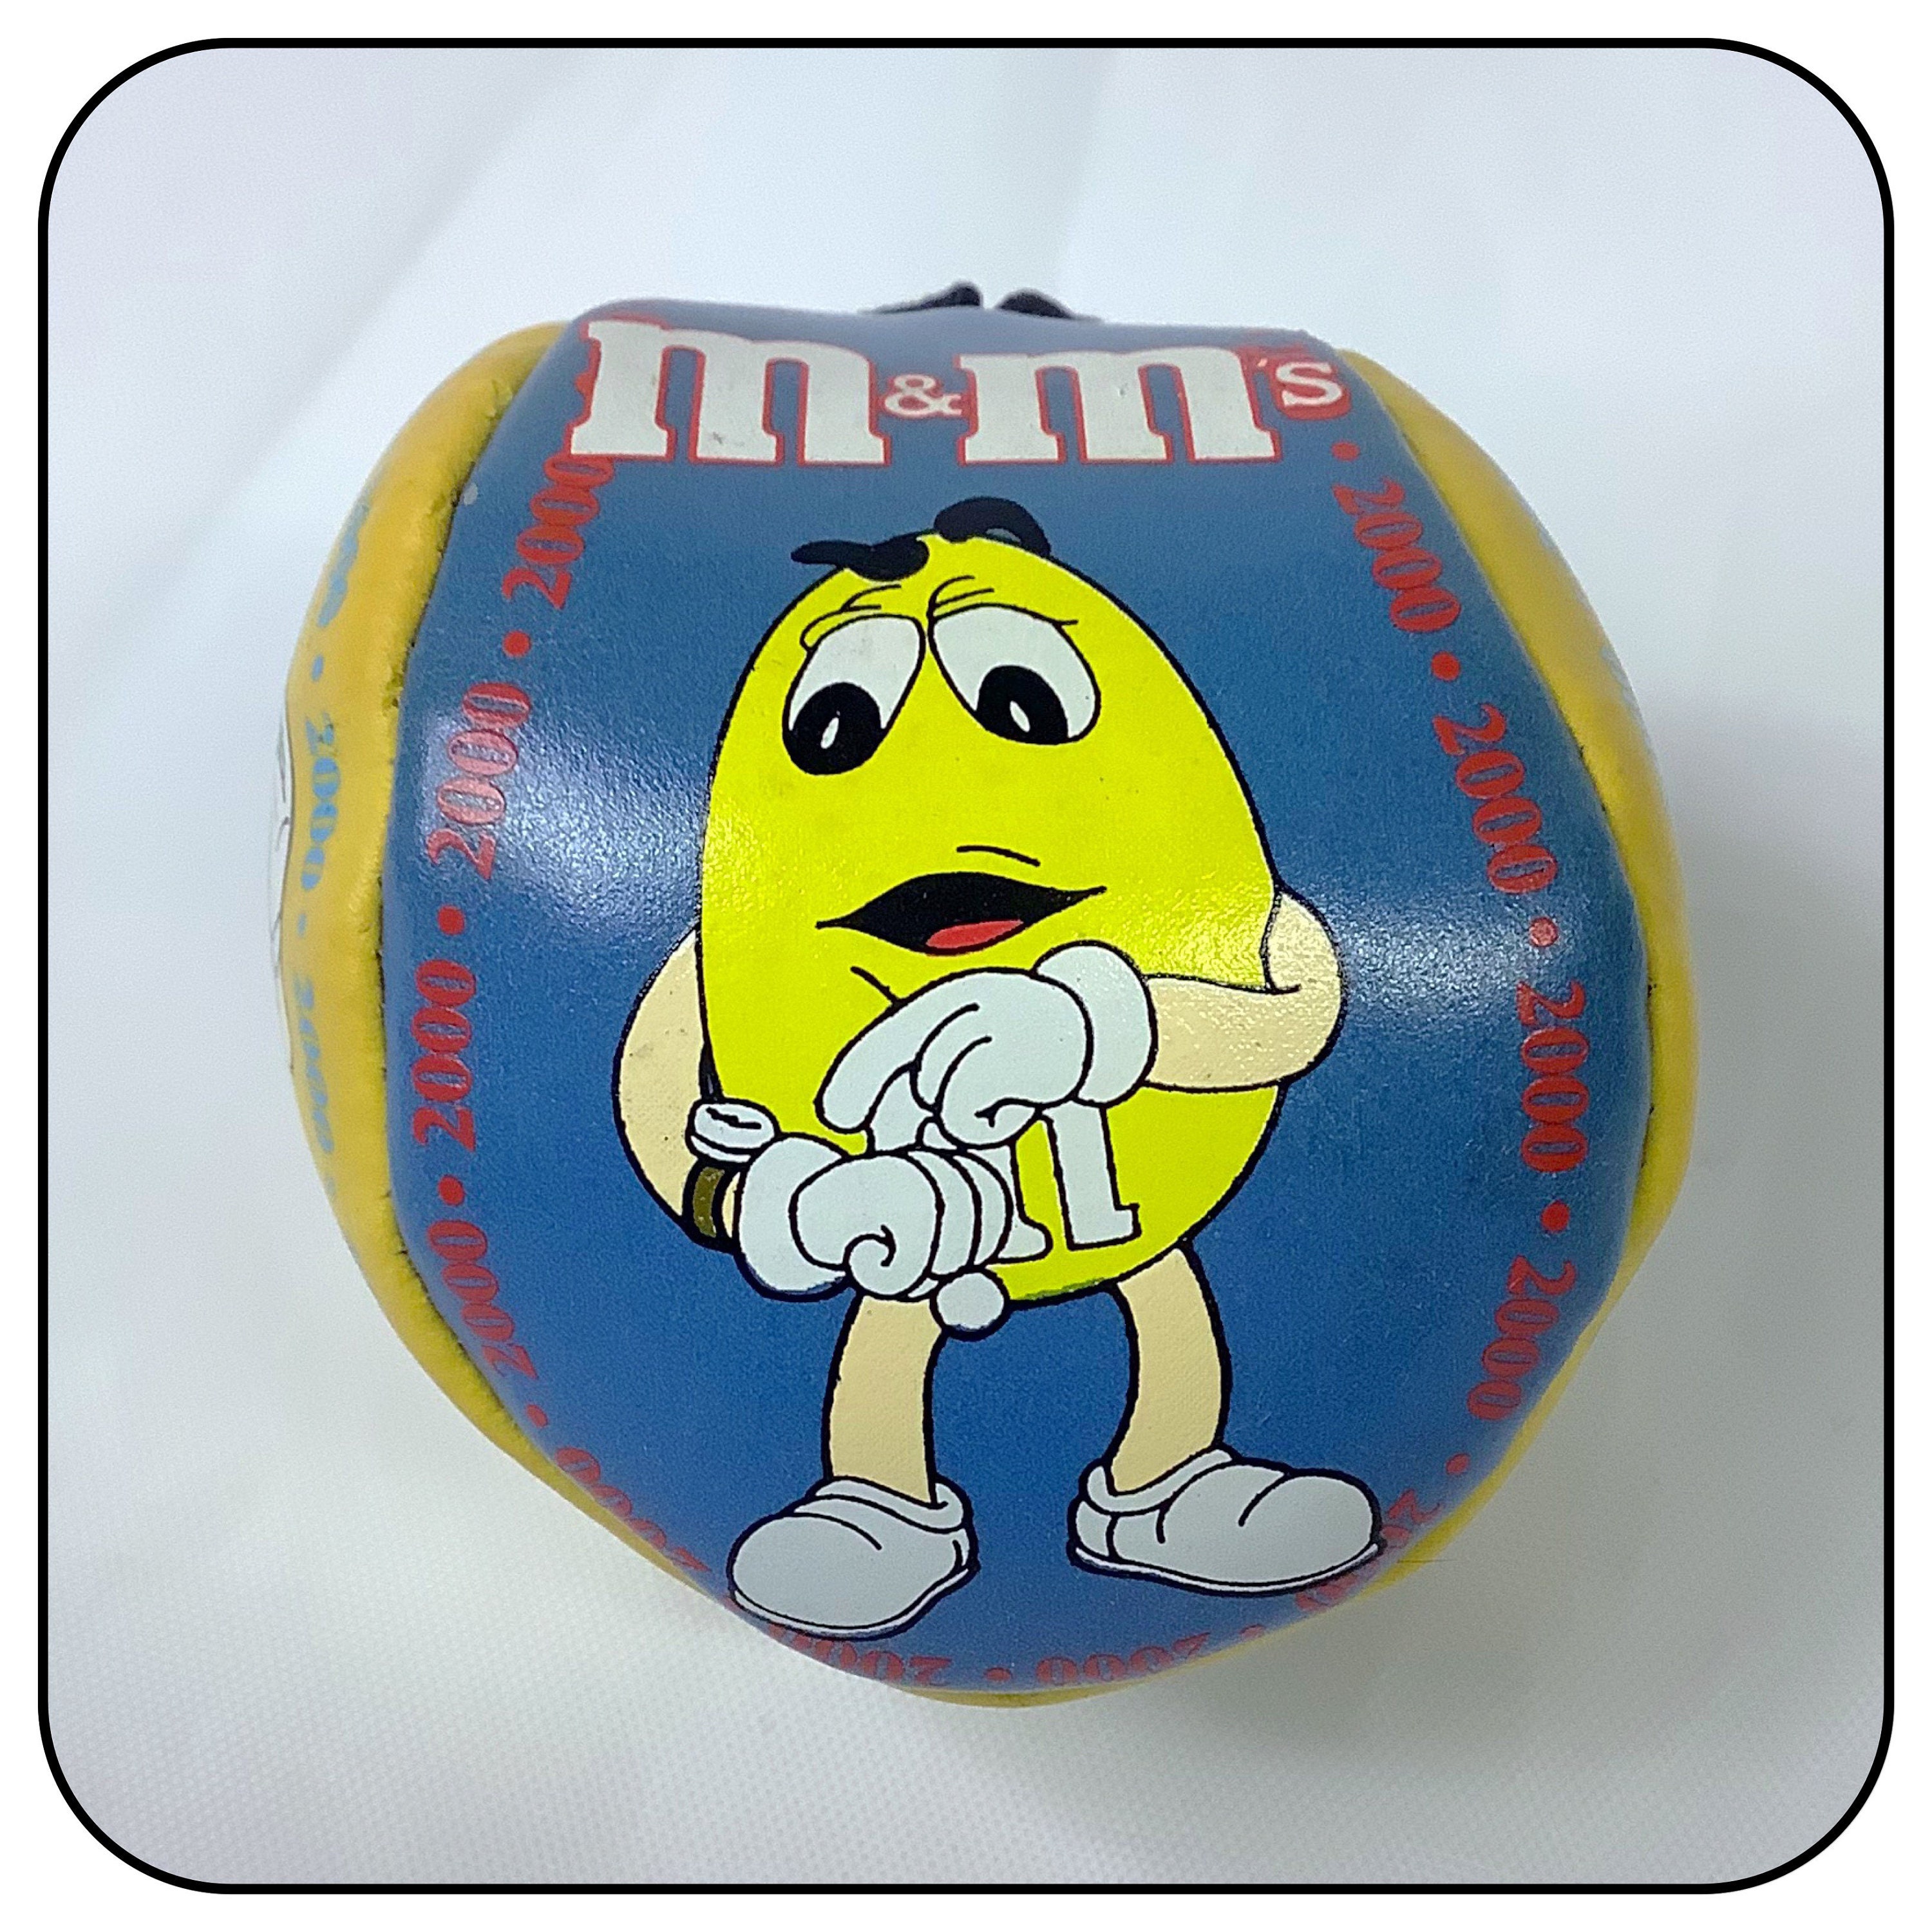 M&m's Millennium Yellow and Blue Hacky Sack Kick Ball 